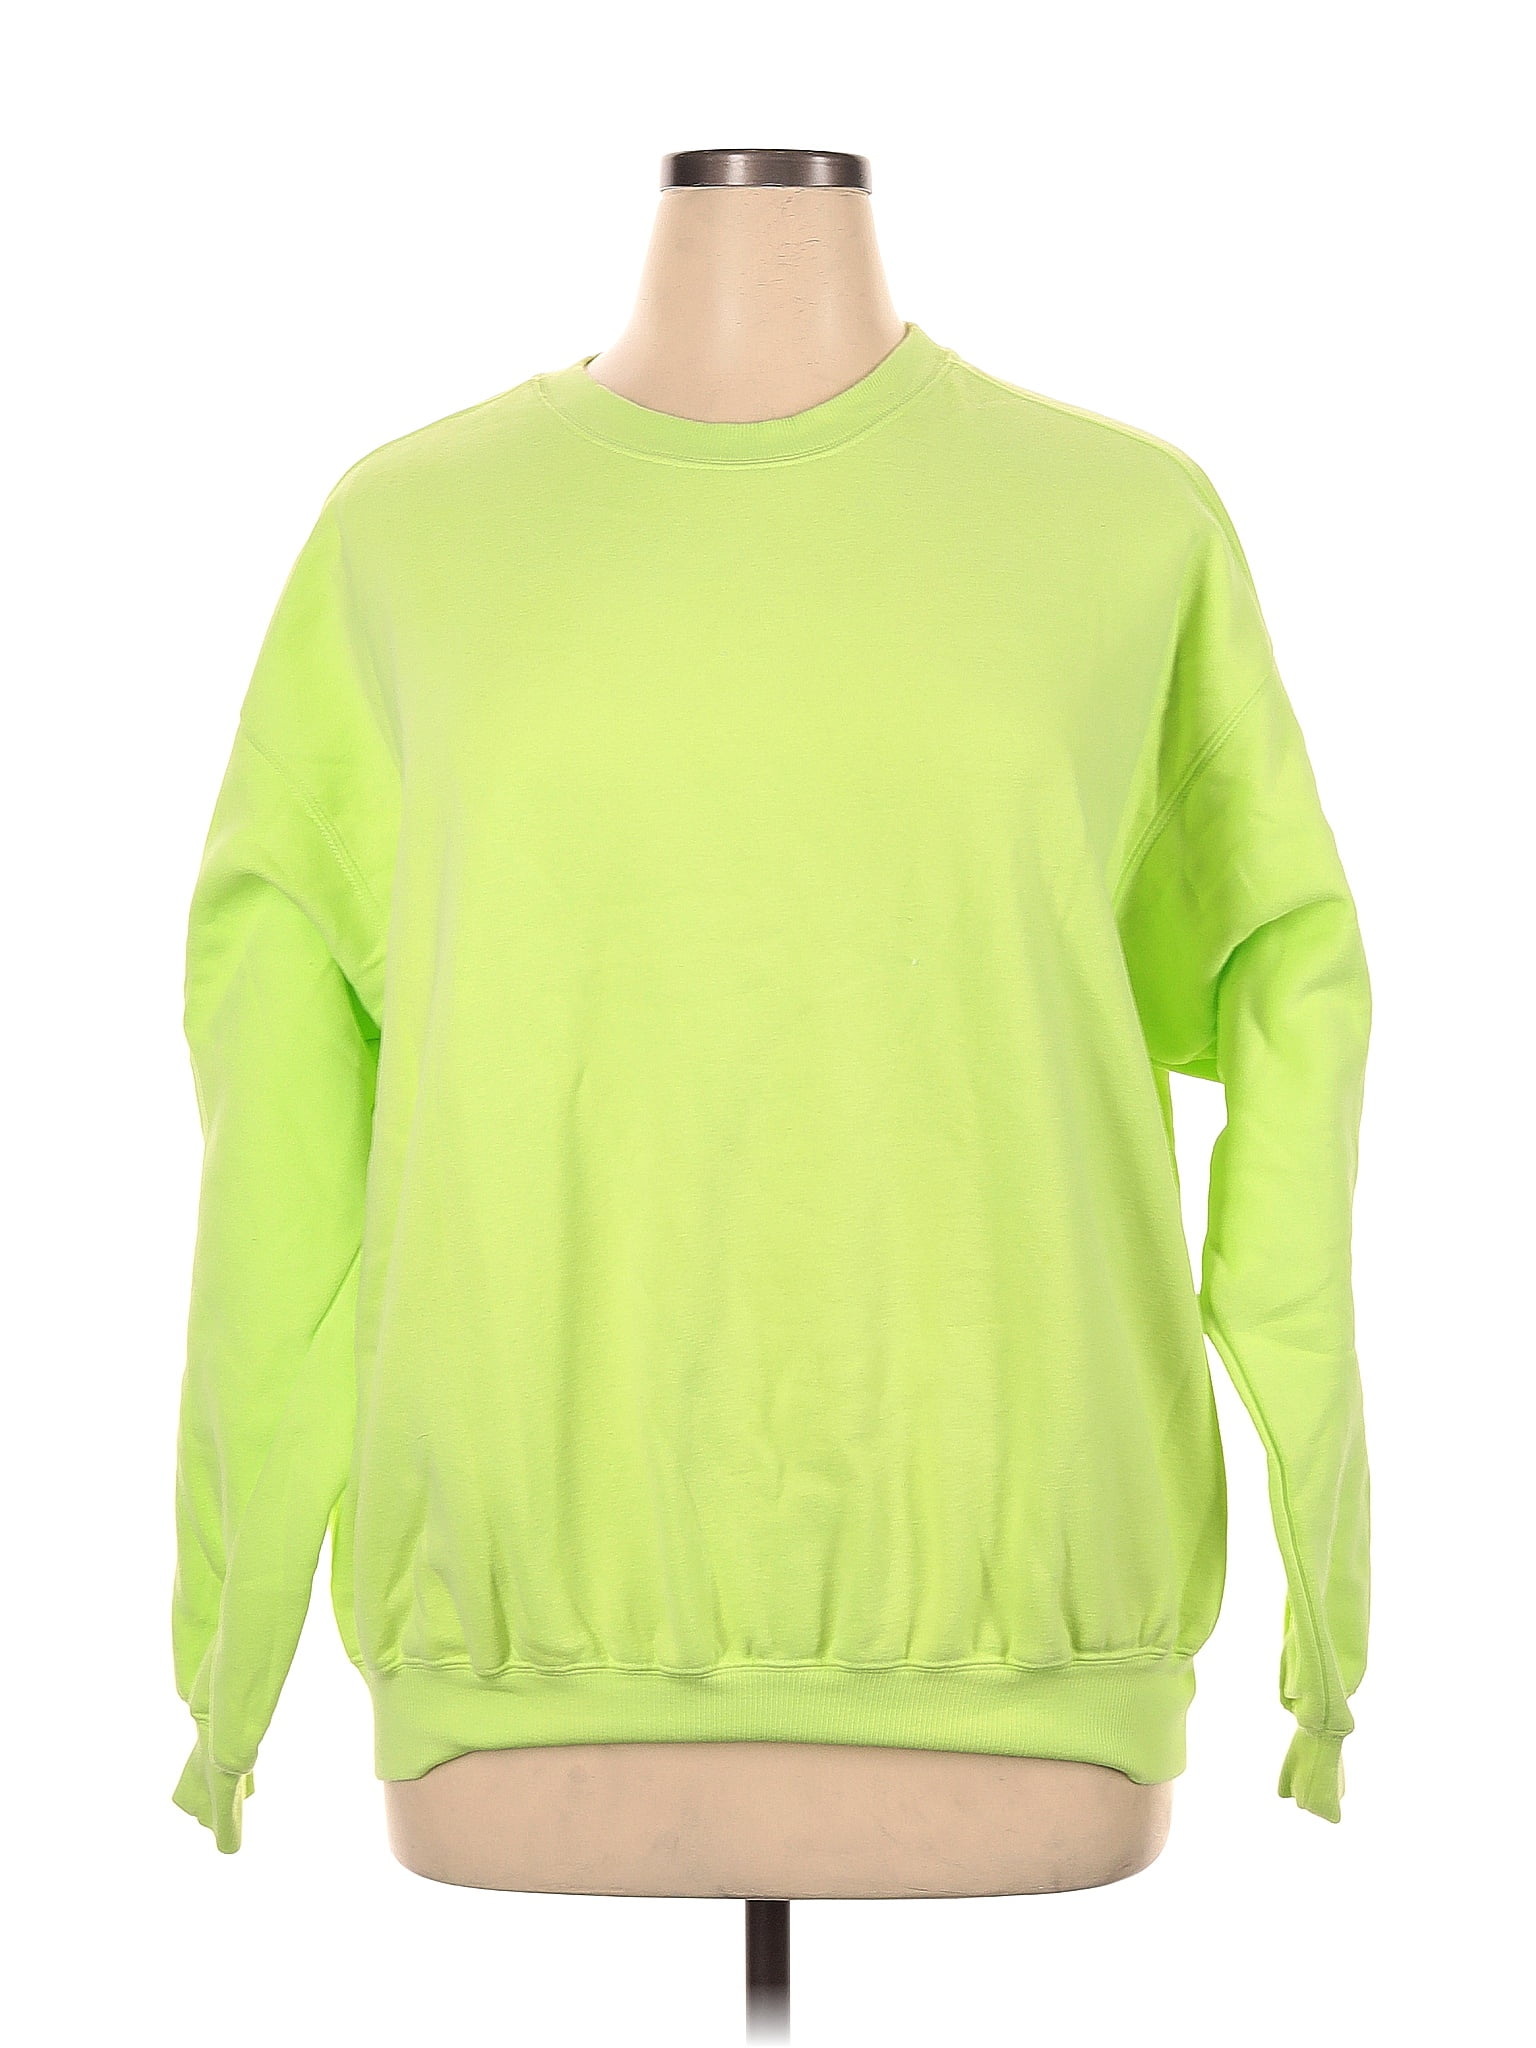 Fabletics Solid Green Sweatshirt Size 1X (Plus) - 54% off